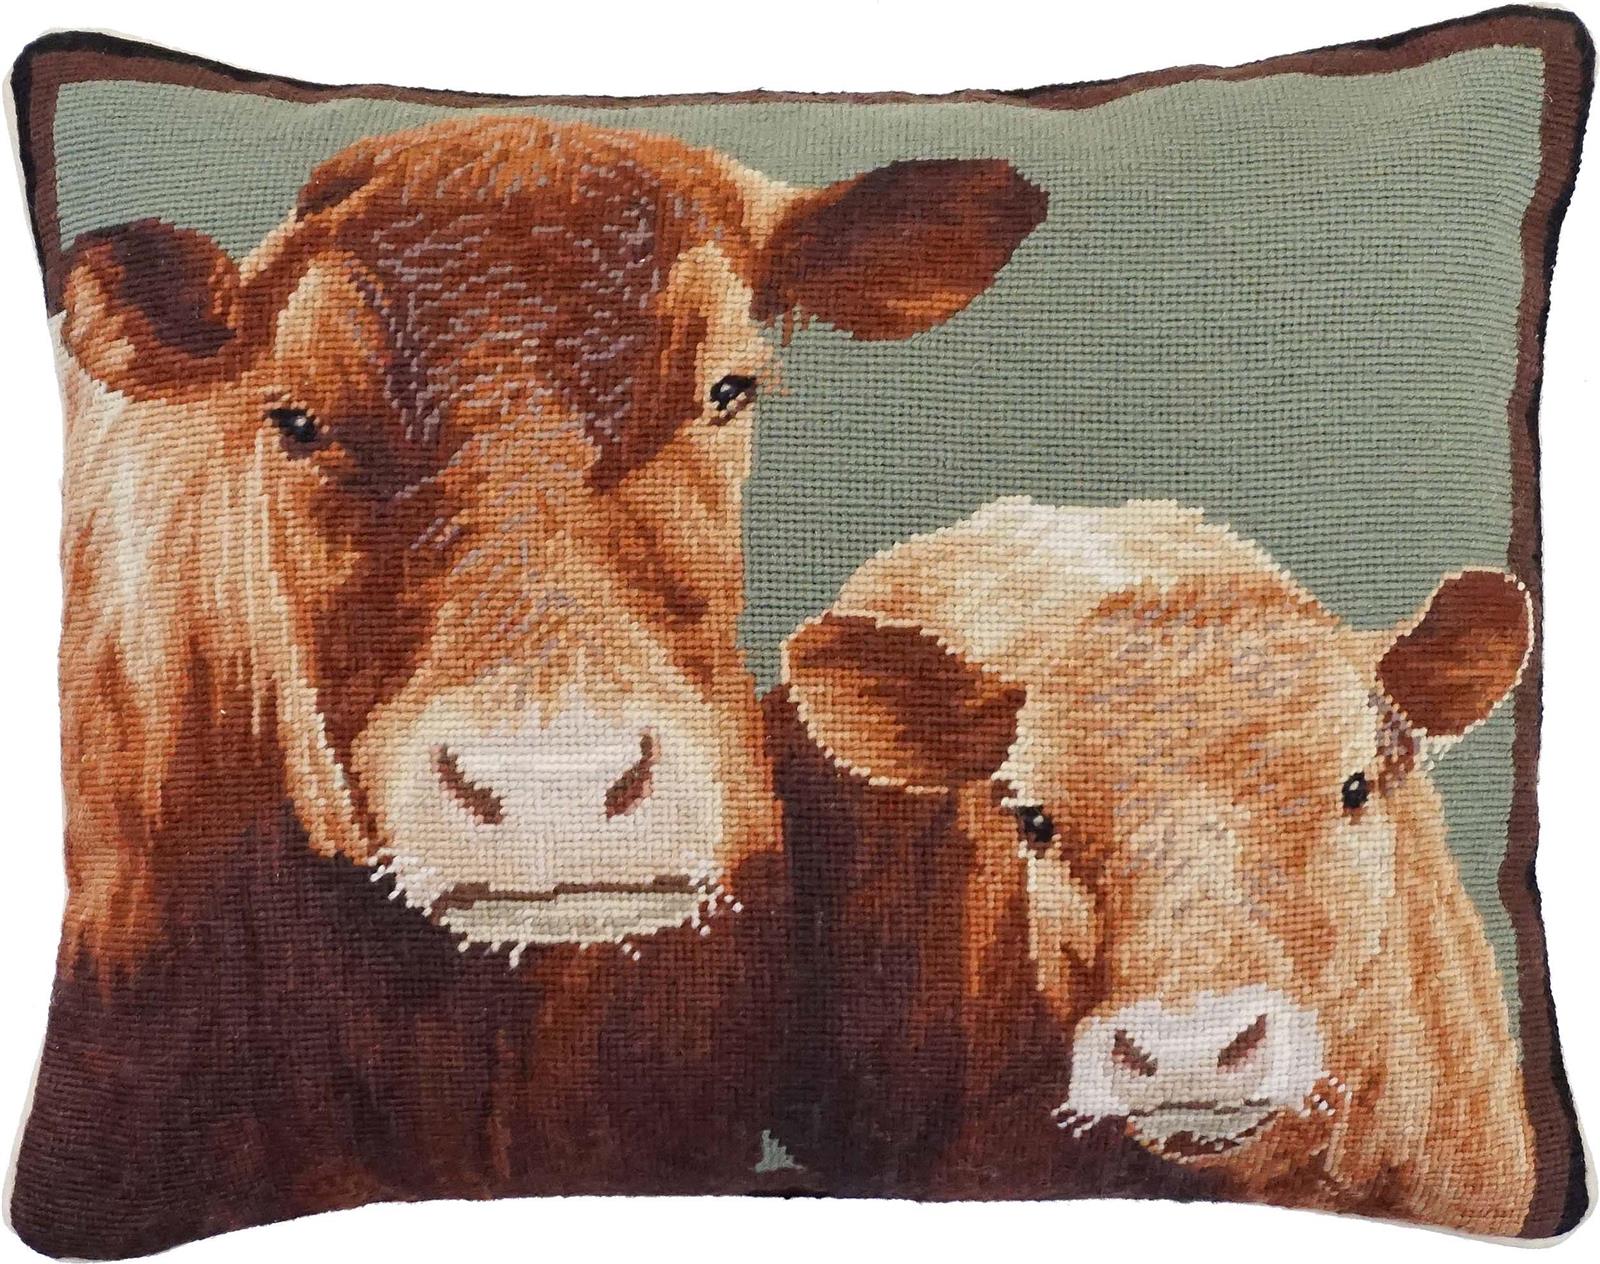 Pillow Throw Needlepoint Cow and Calf 16x20 20x16 Brown Cream White Green Cotton-Image 1